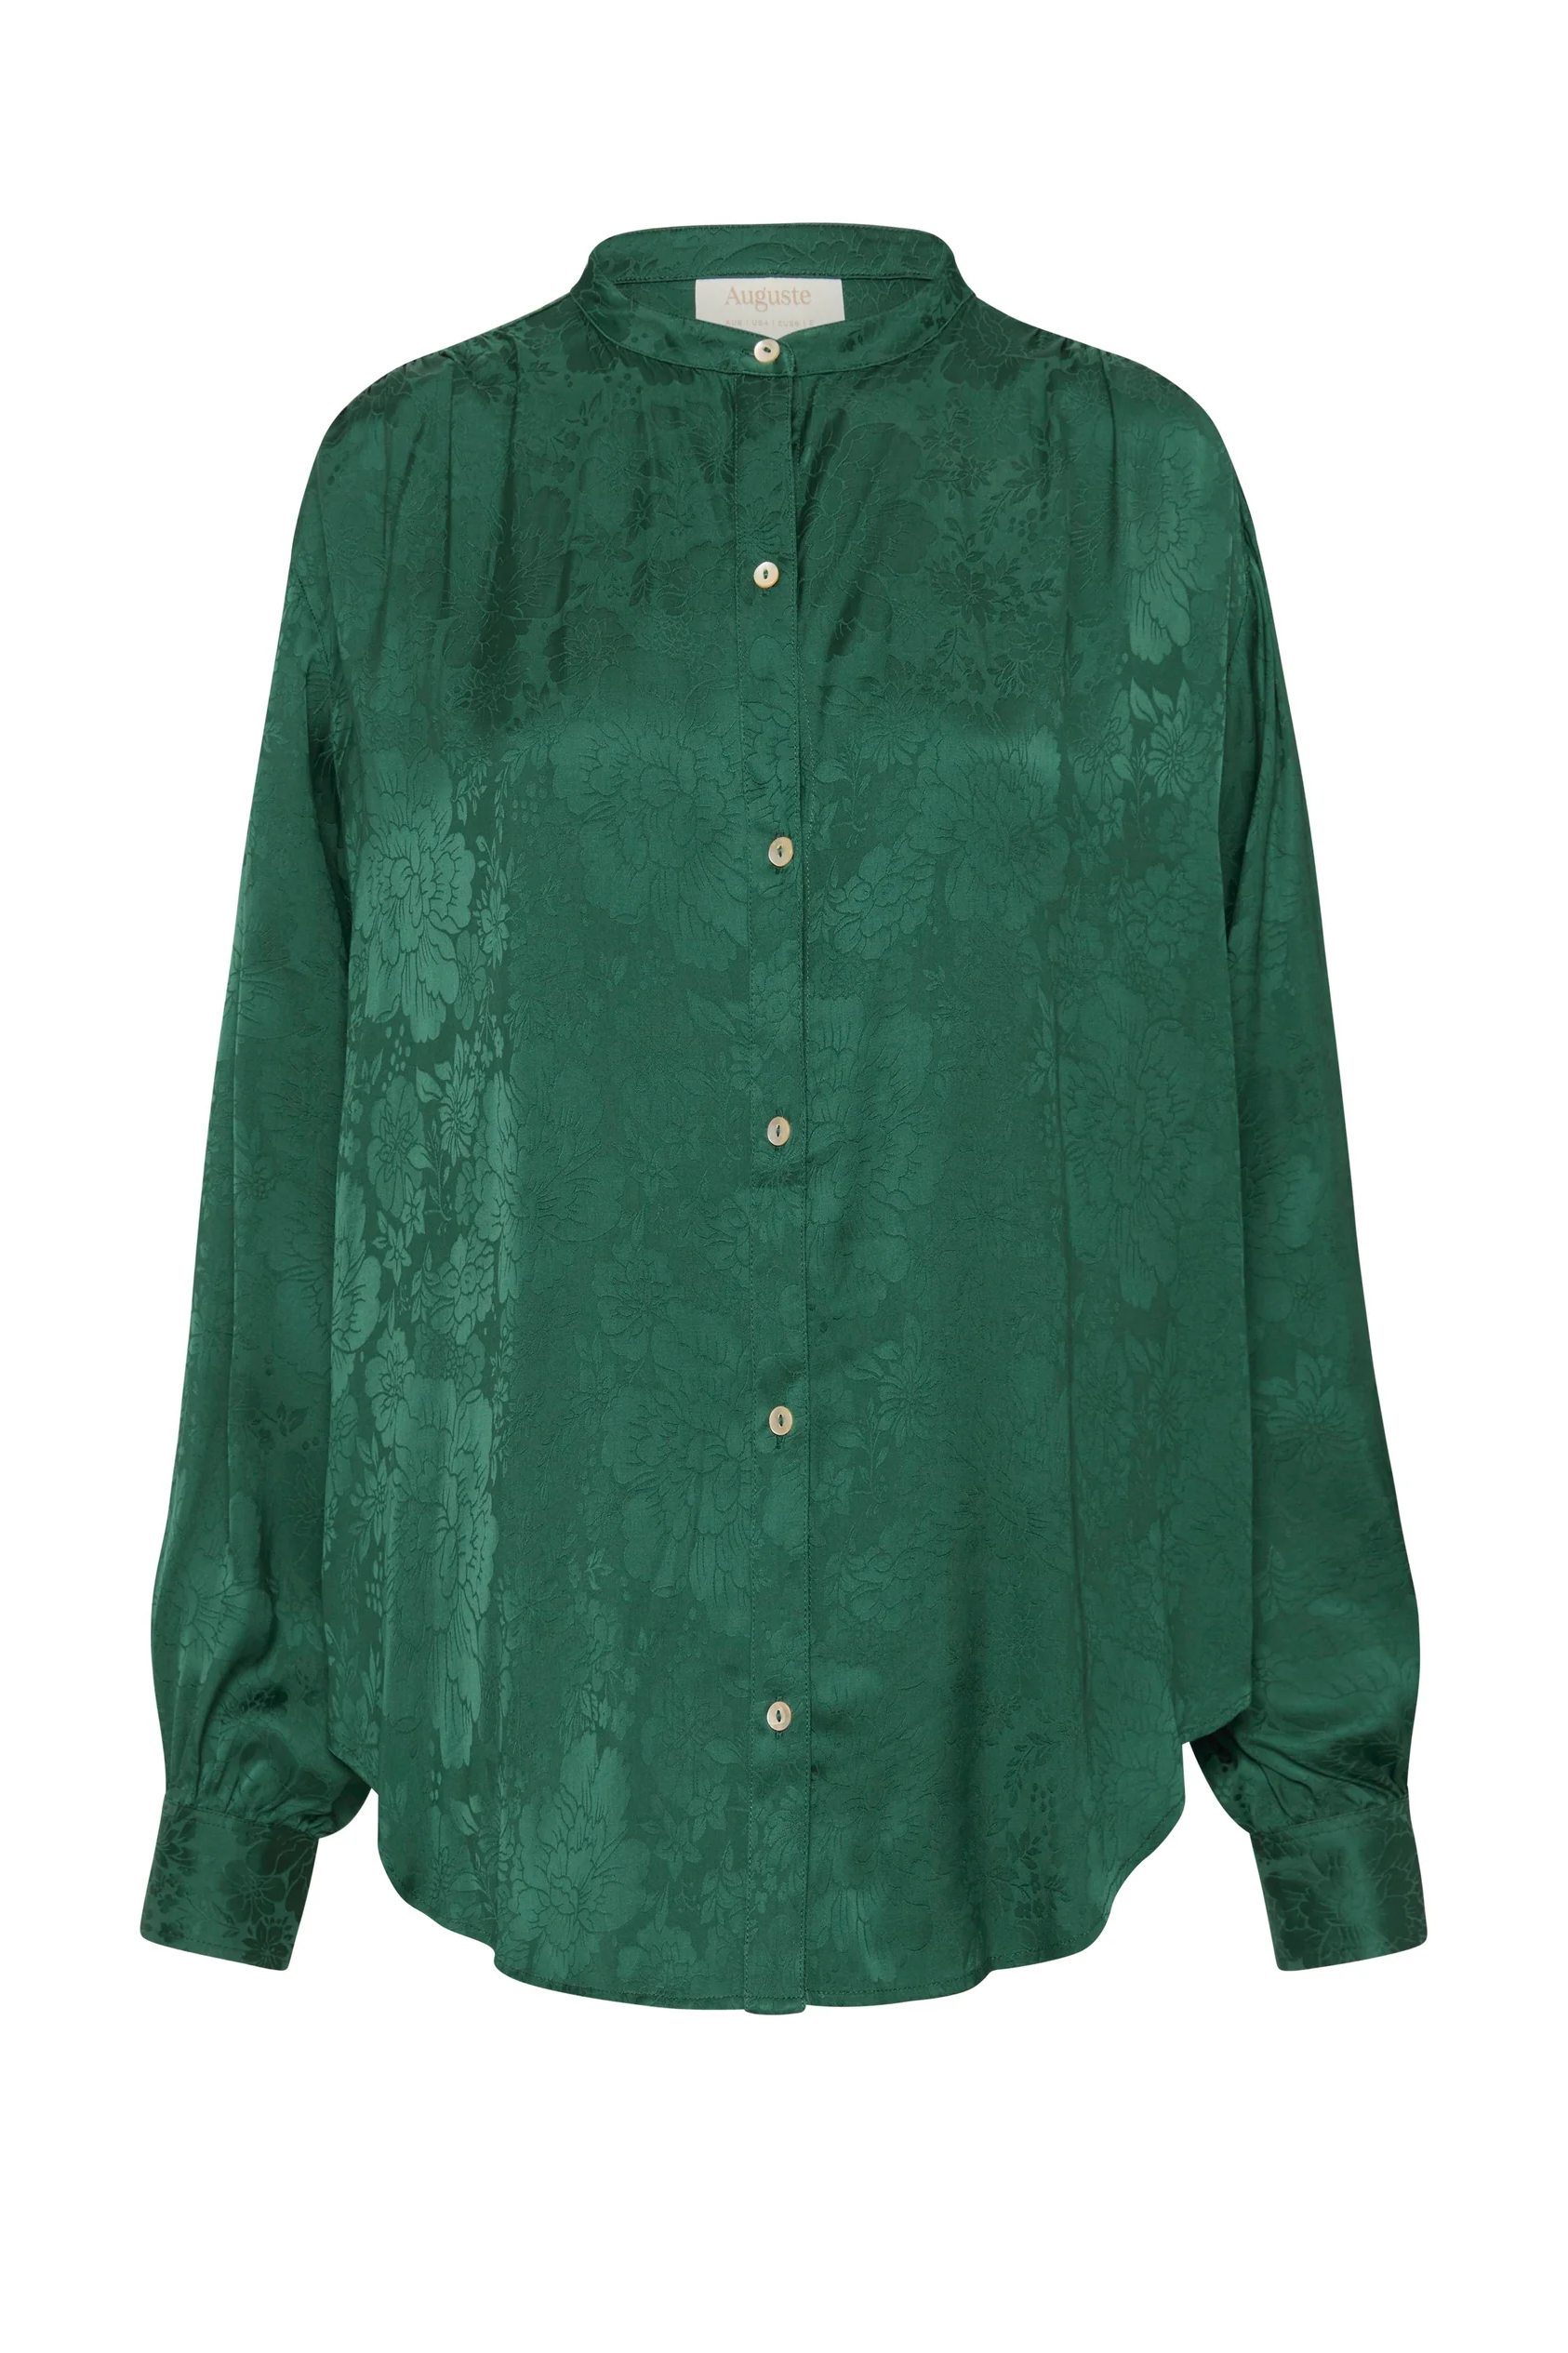 Julian Shirt - Emerald Green